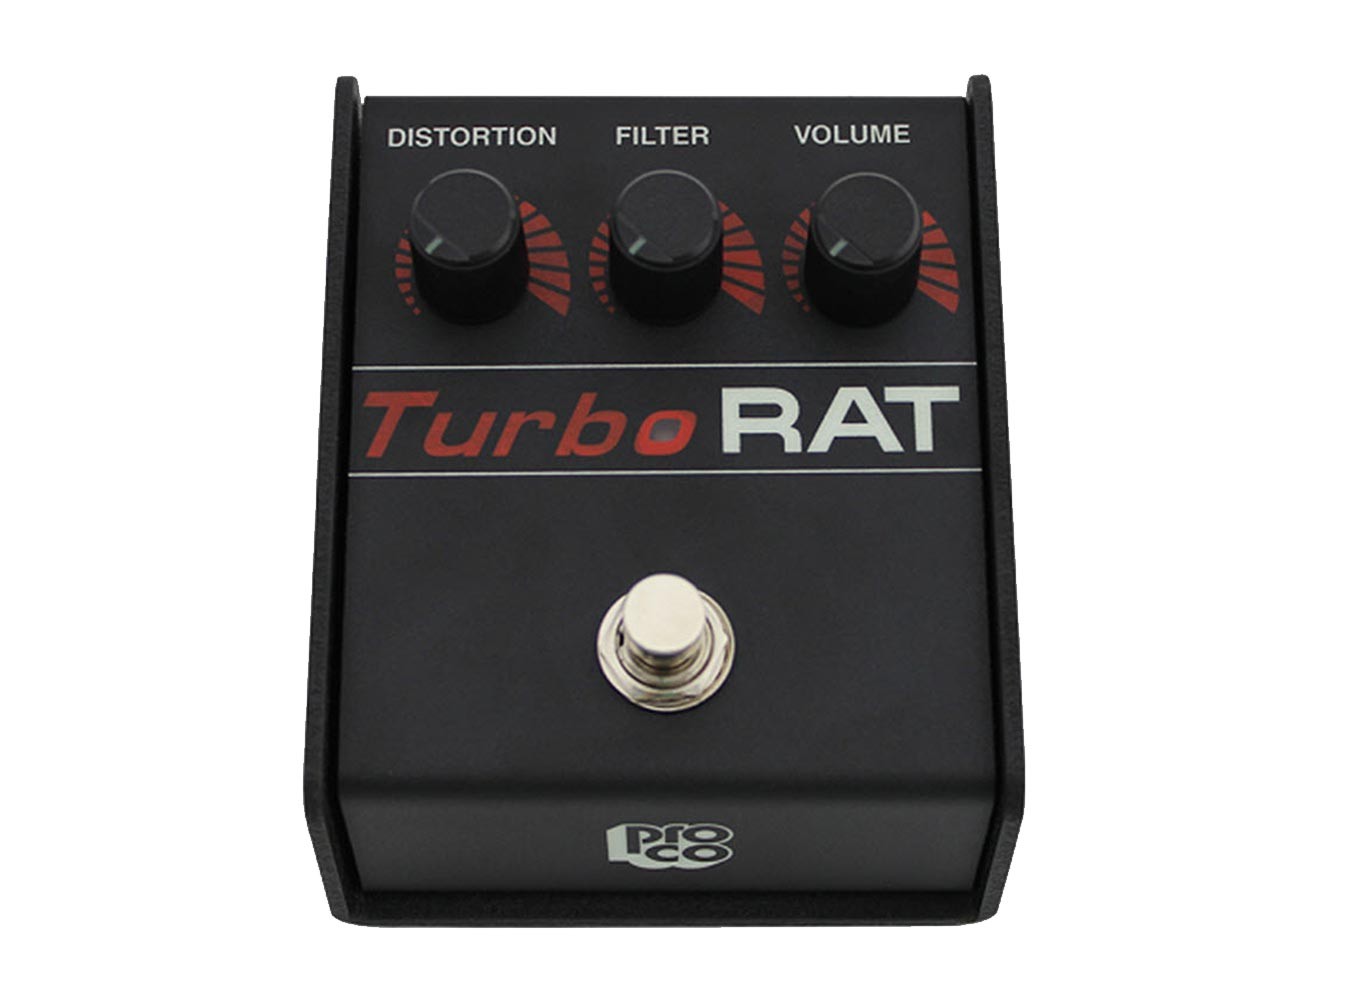 Turbo RAT Distortion Pedal